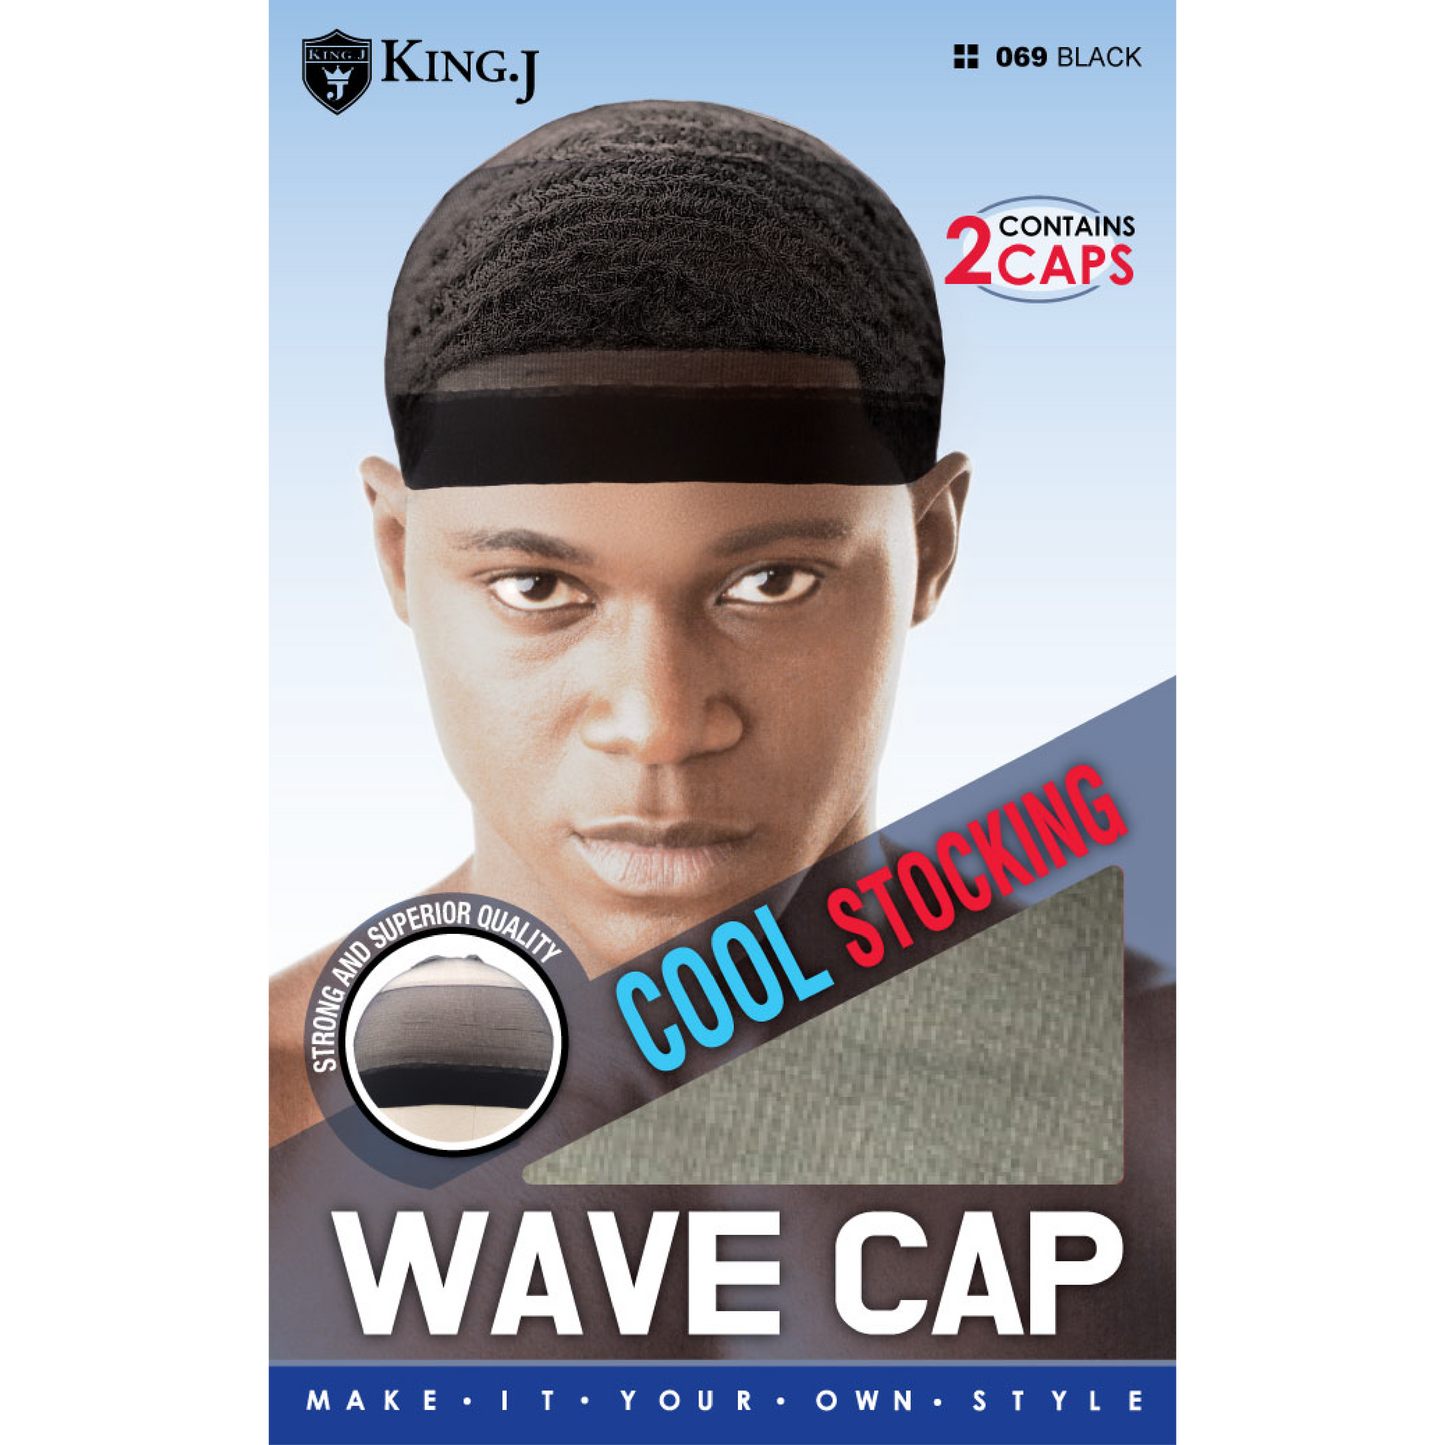 COOL STOCKING WAVE CAP